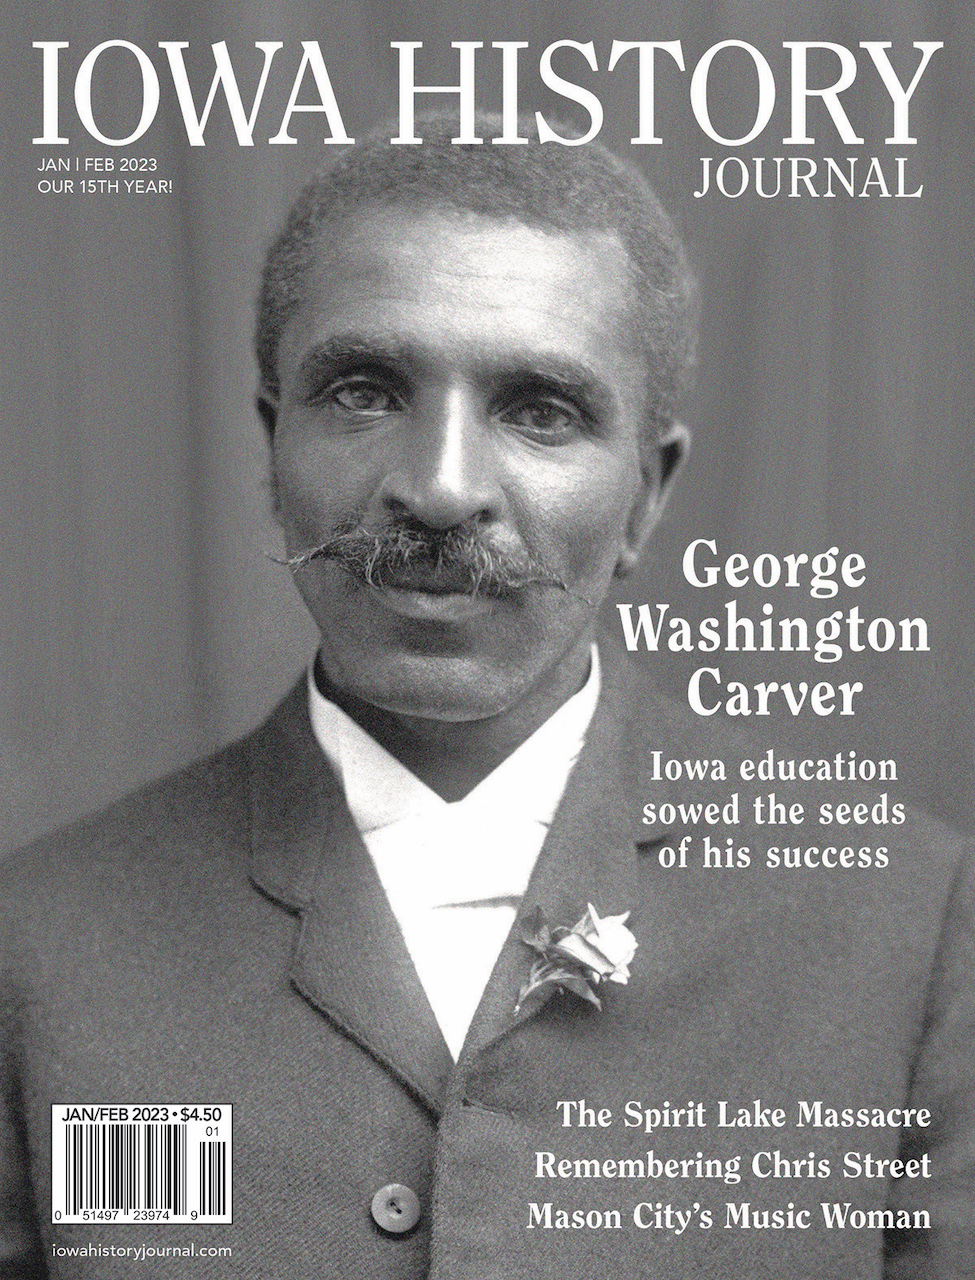 Volume 15, Issue 1 - George Washington Carver